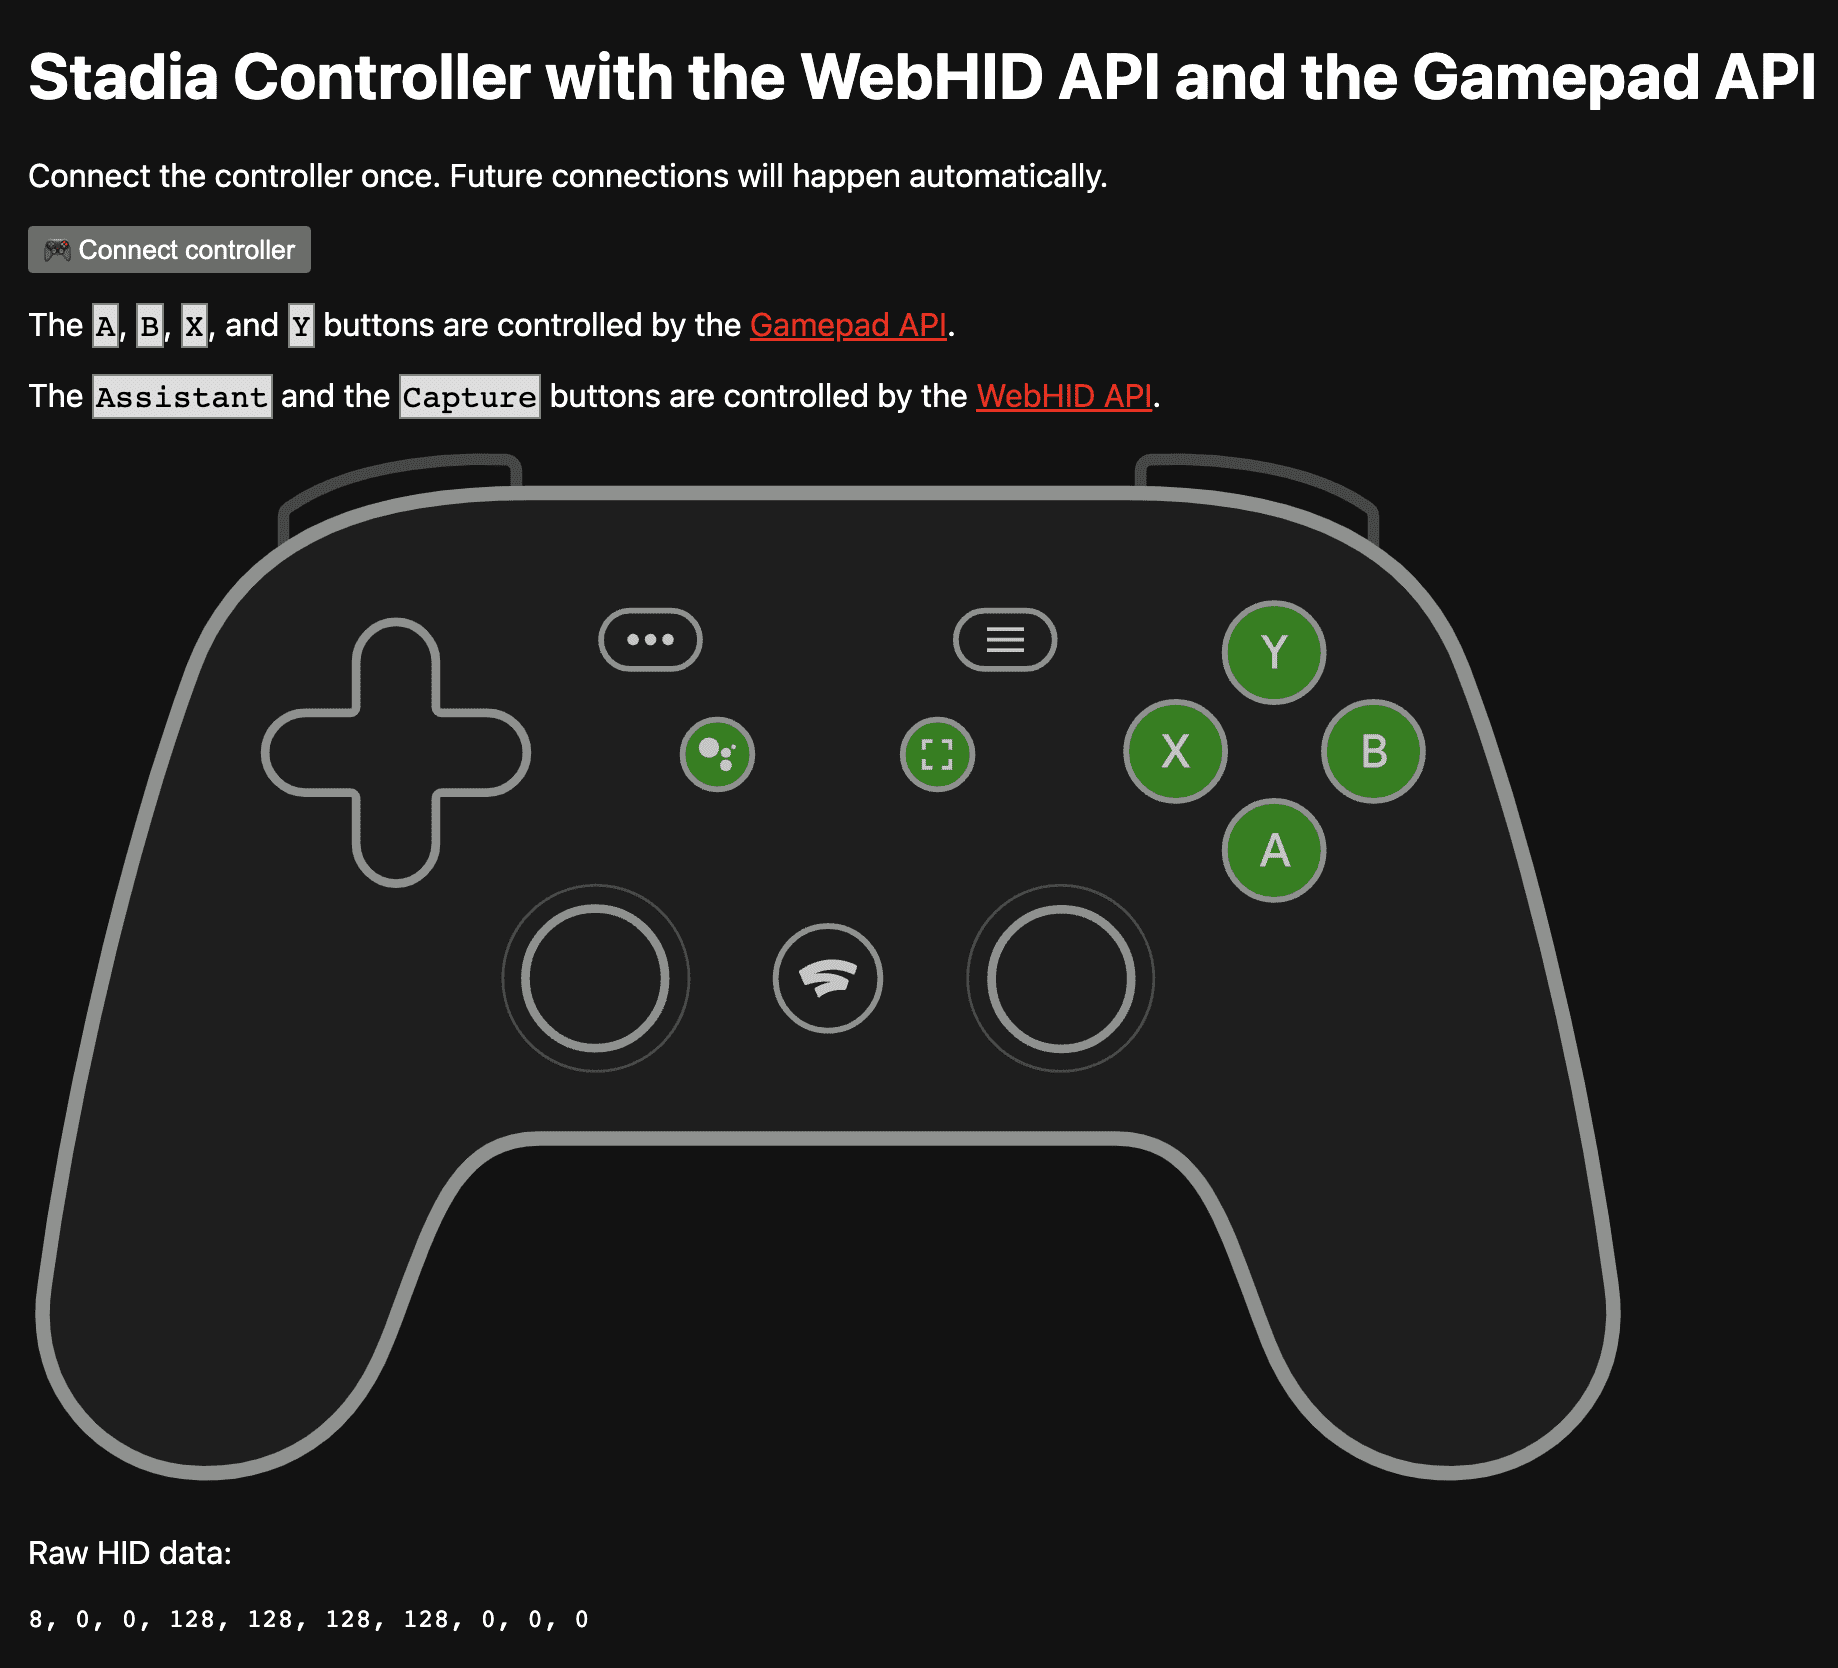 https://stadia-controller-webhid-gamepad.glitch.me/ 上的演示版应用显示了由 Gamepad API 控制的 A、B、X 和 Y 按钮，以及由 WebHID API 控制的 Google 助理和“摄趣”按钮。